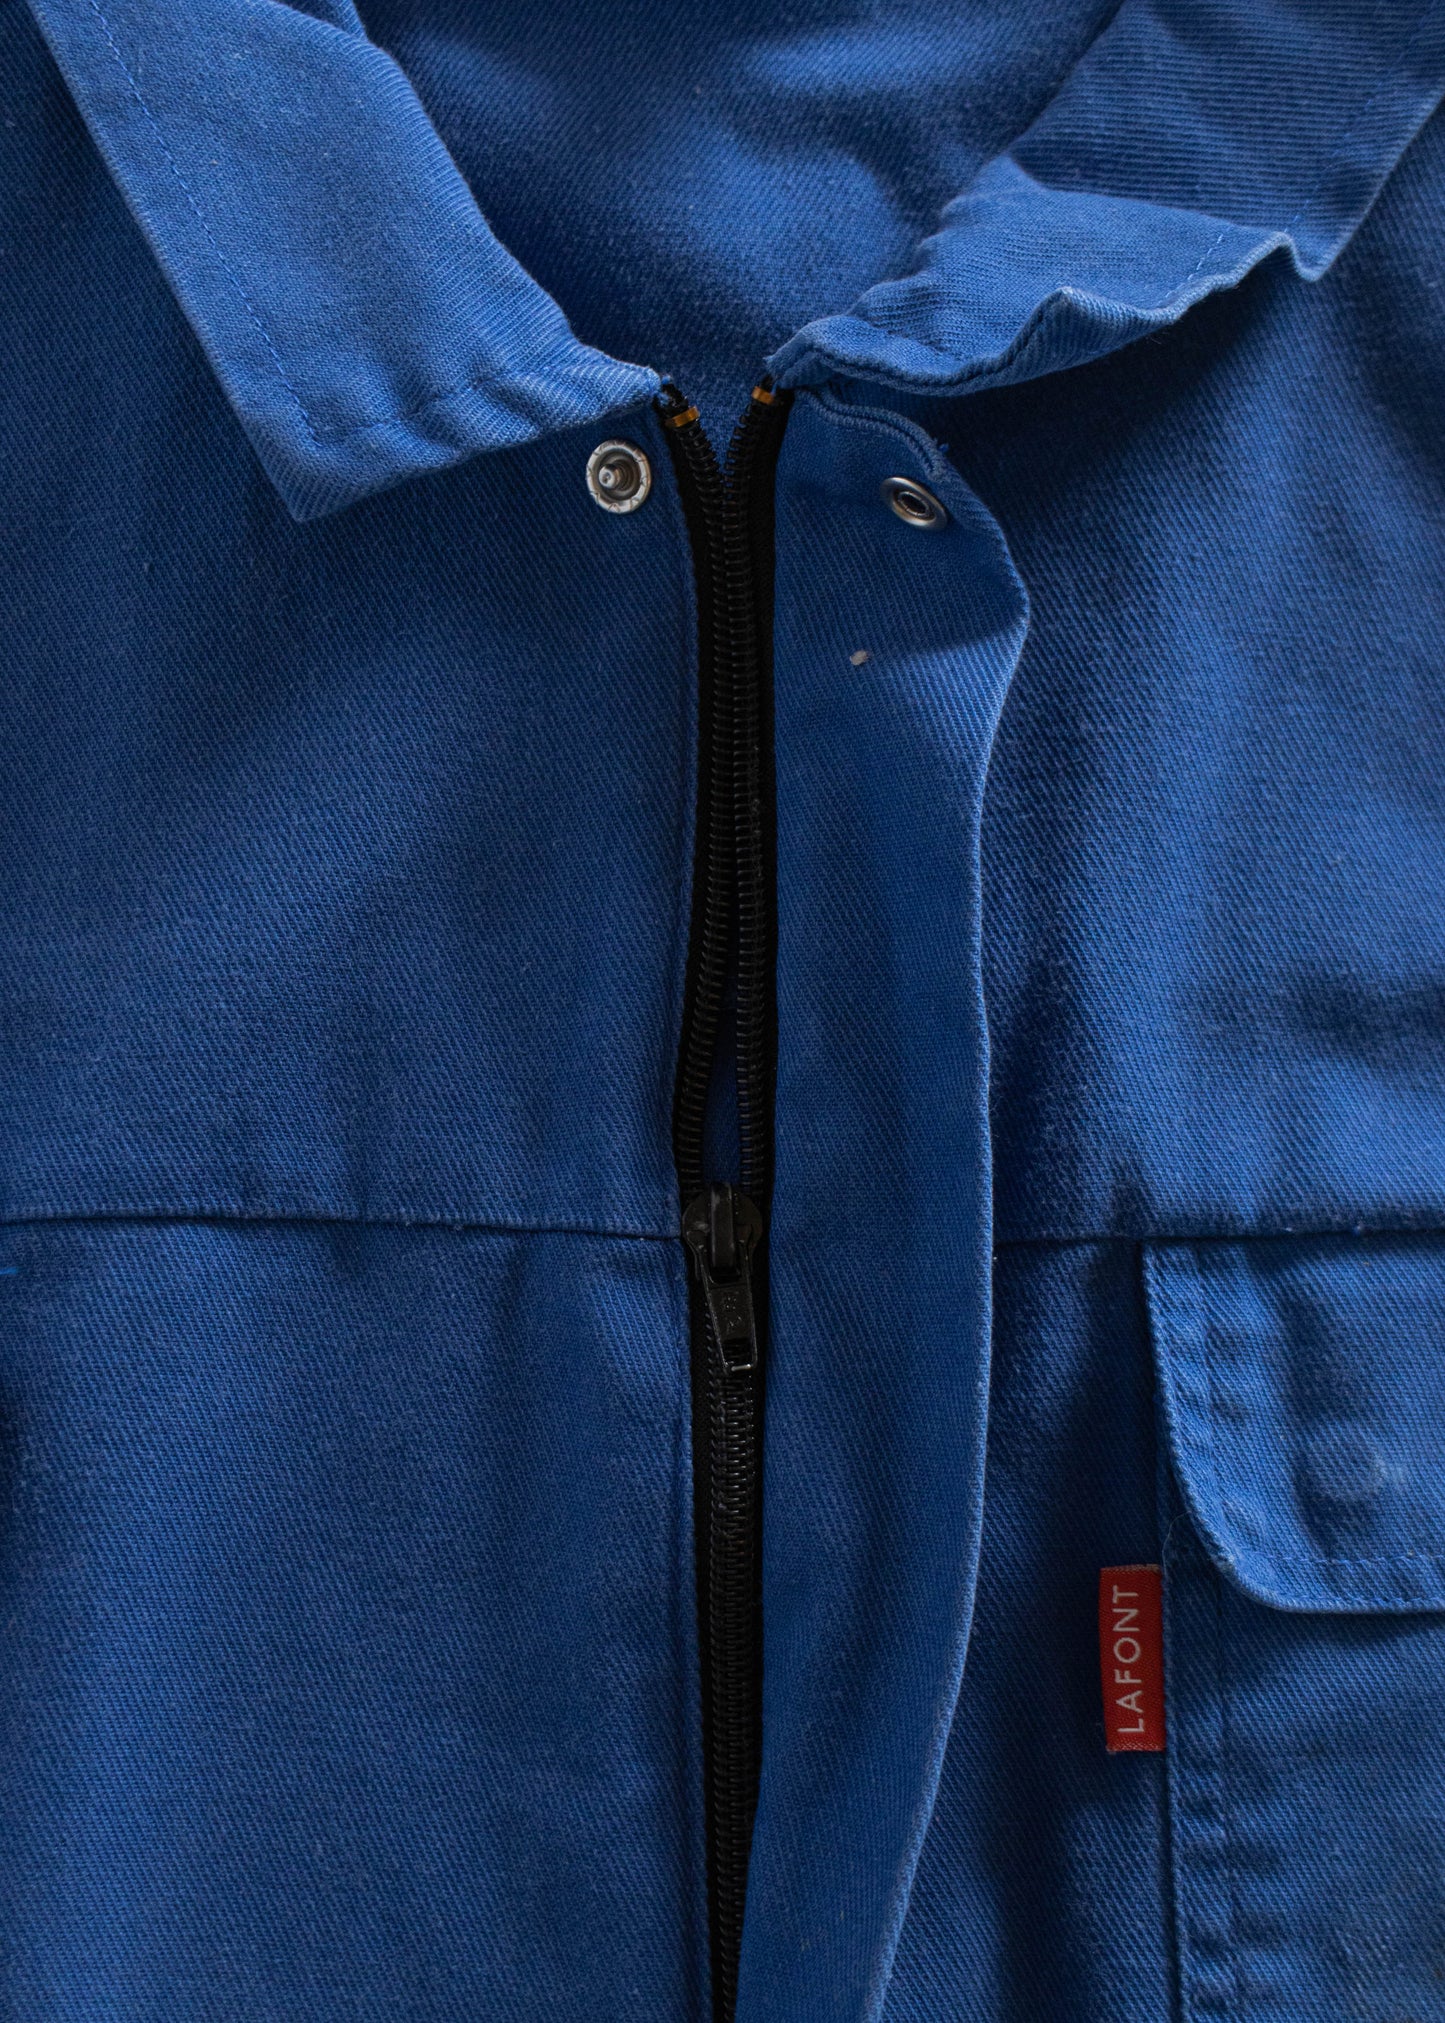 1980s Lafont French Workwear Chore Jacket Size 2XL/3XL